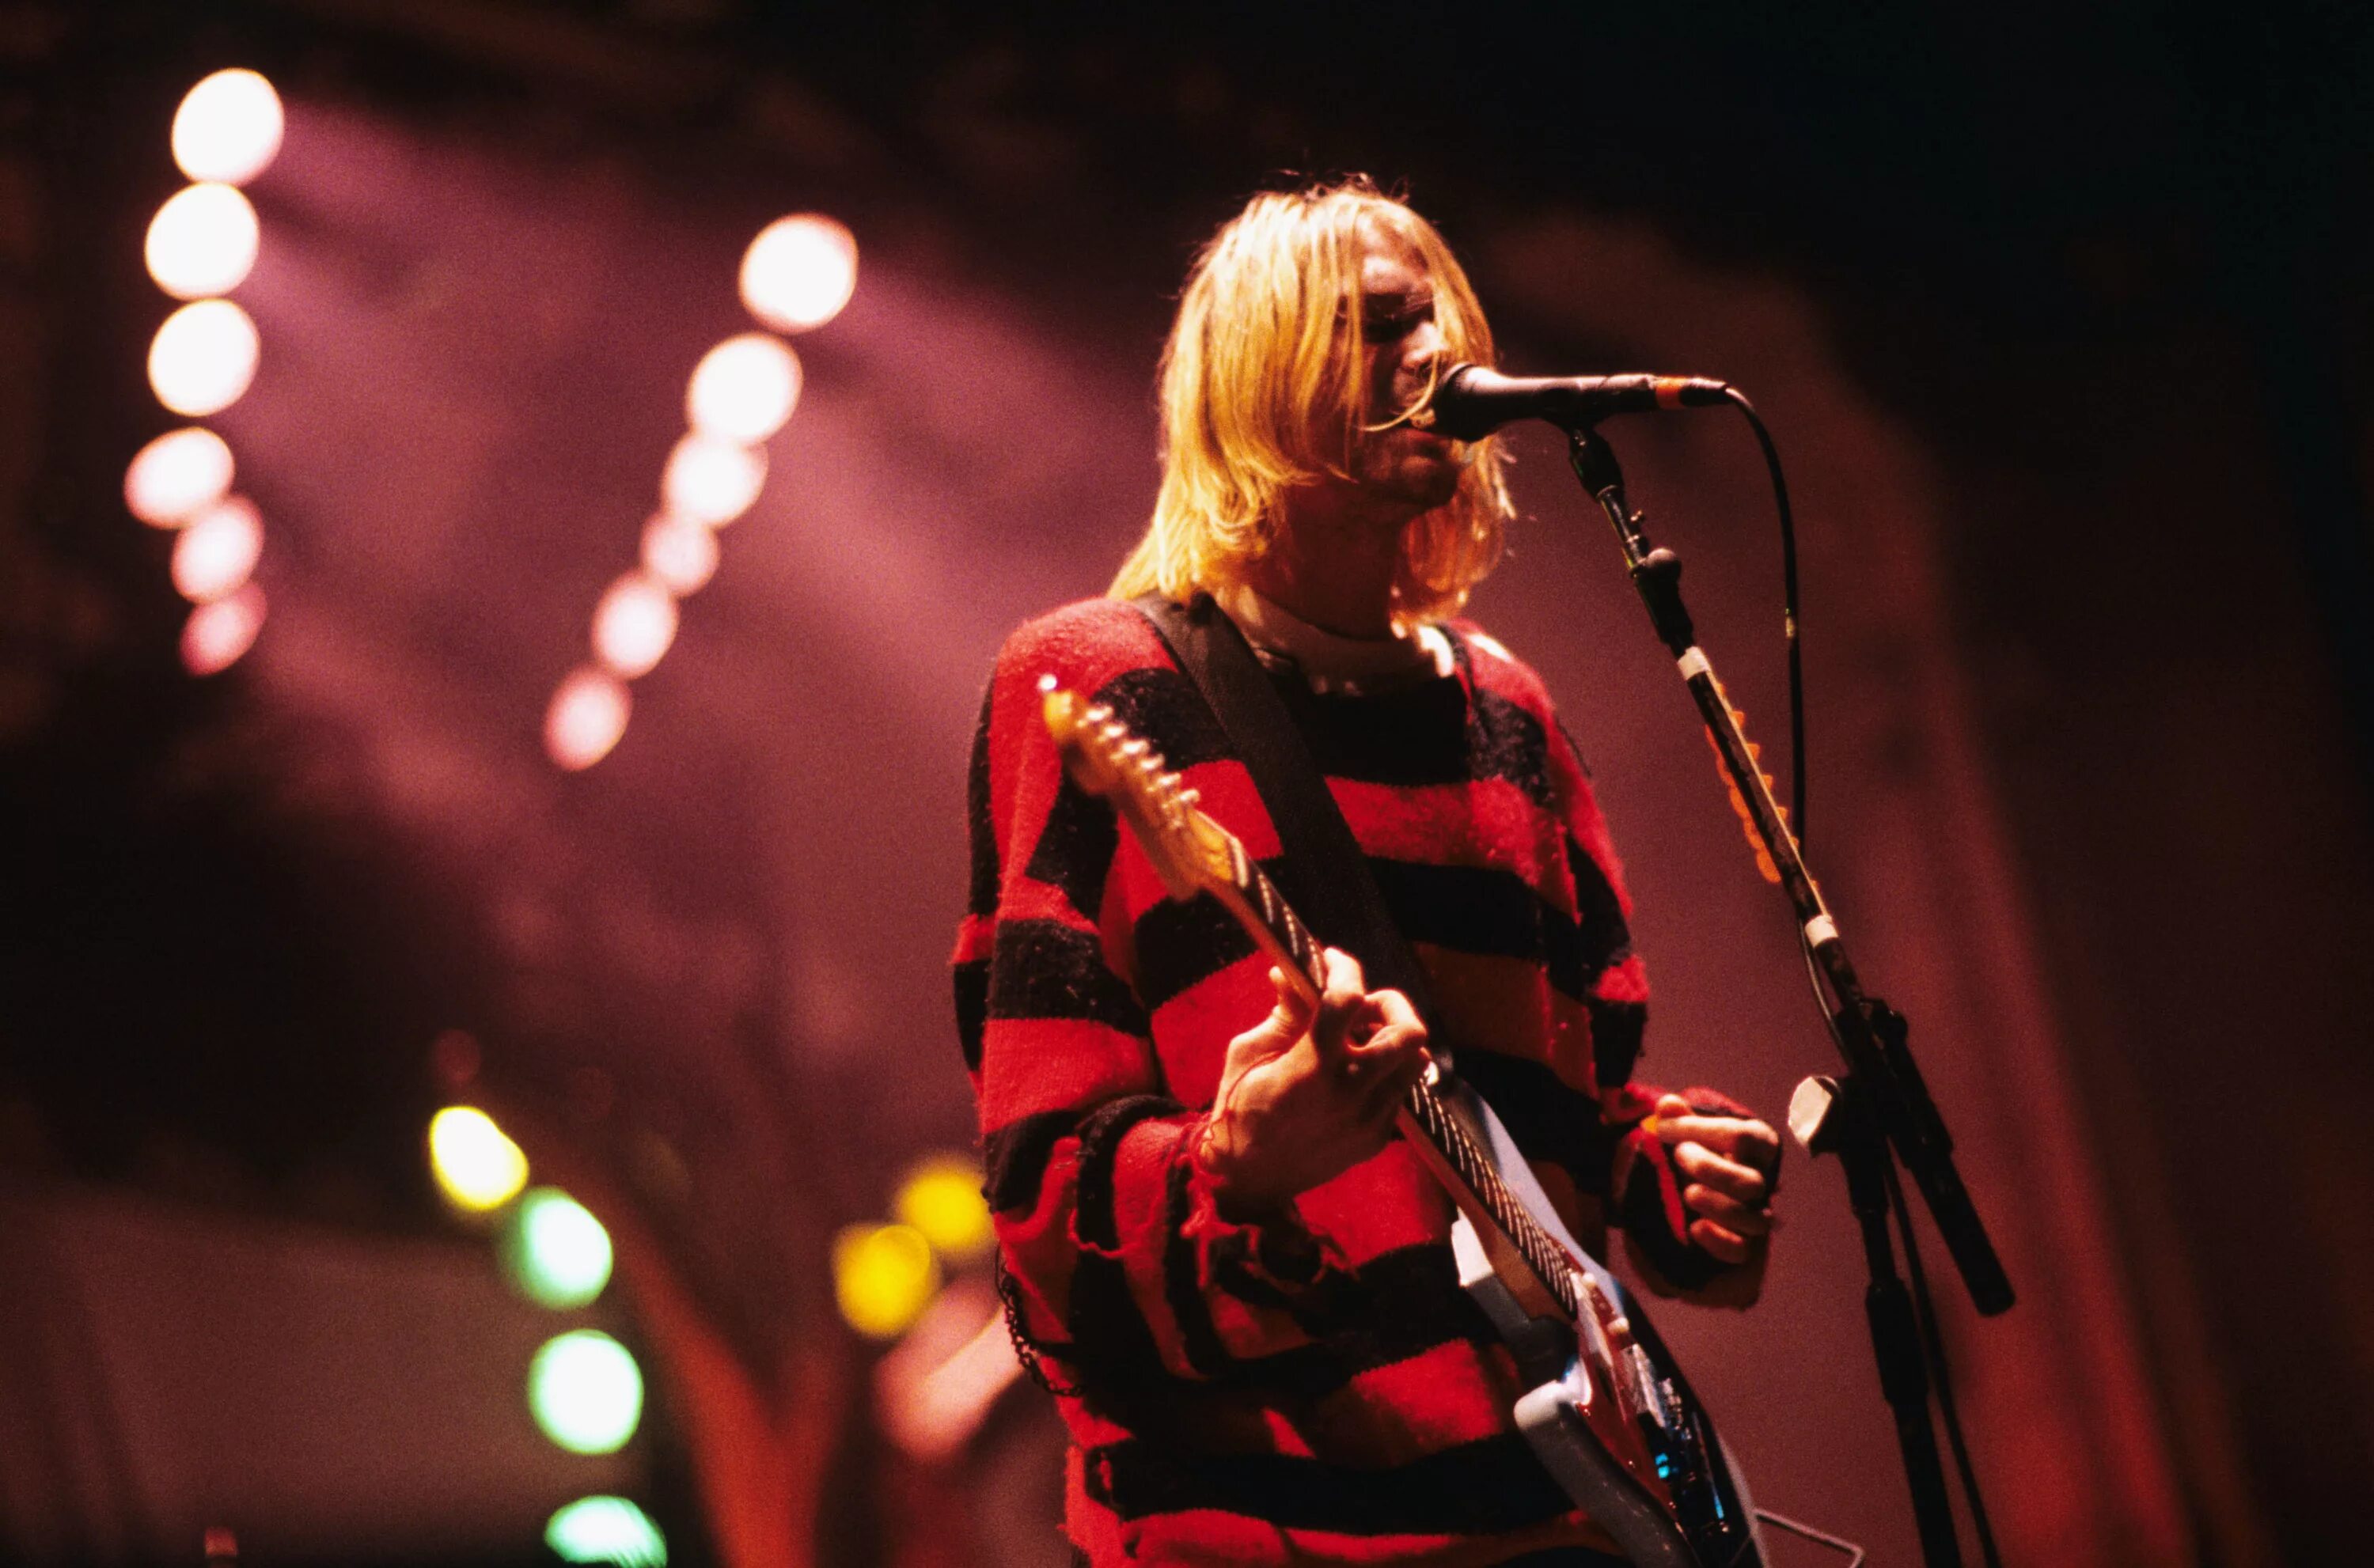 Nirvana new. Курт Кобейн и Nirvana. Курта Кобейна Нирвана. Курт Кобейн 1991. Курт Кобейн в Красном свитере 1993.